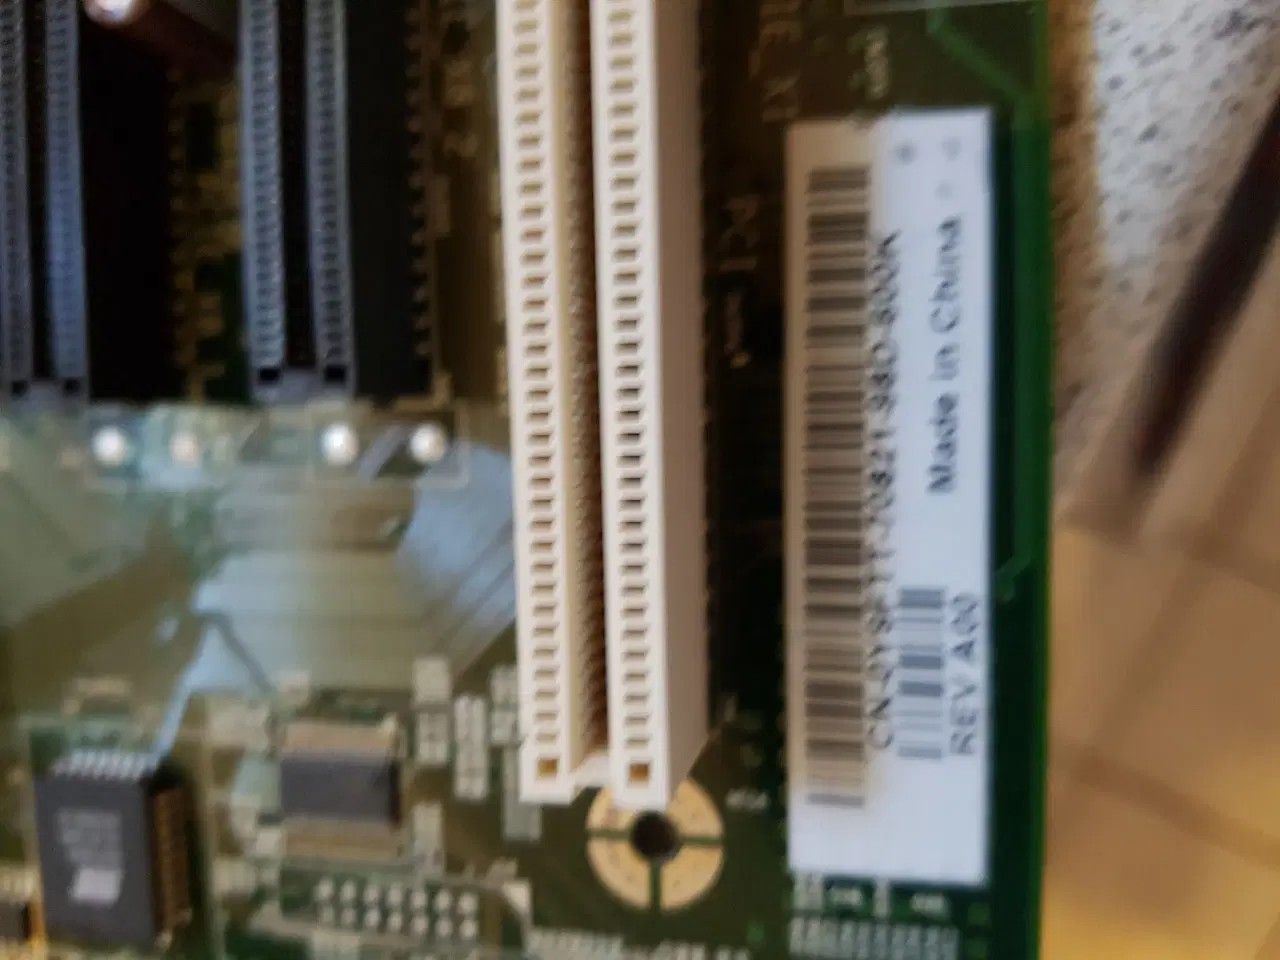 Billede 2 - Bundkort fra Dell powerEdge T105 server.